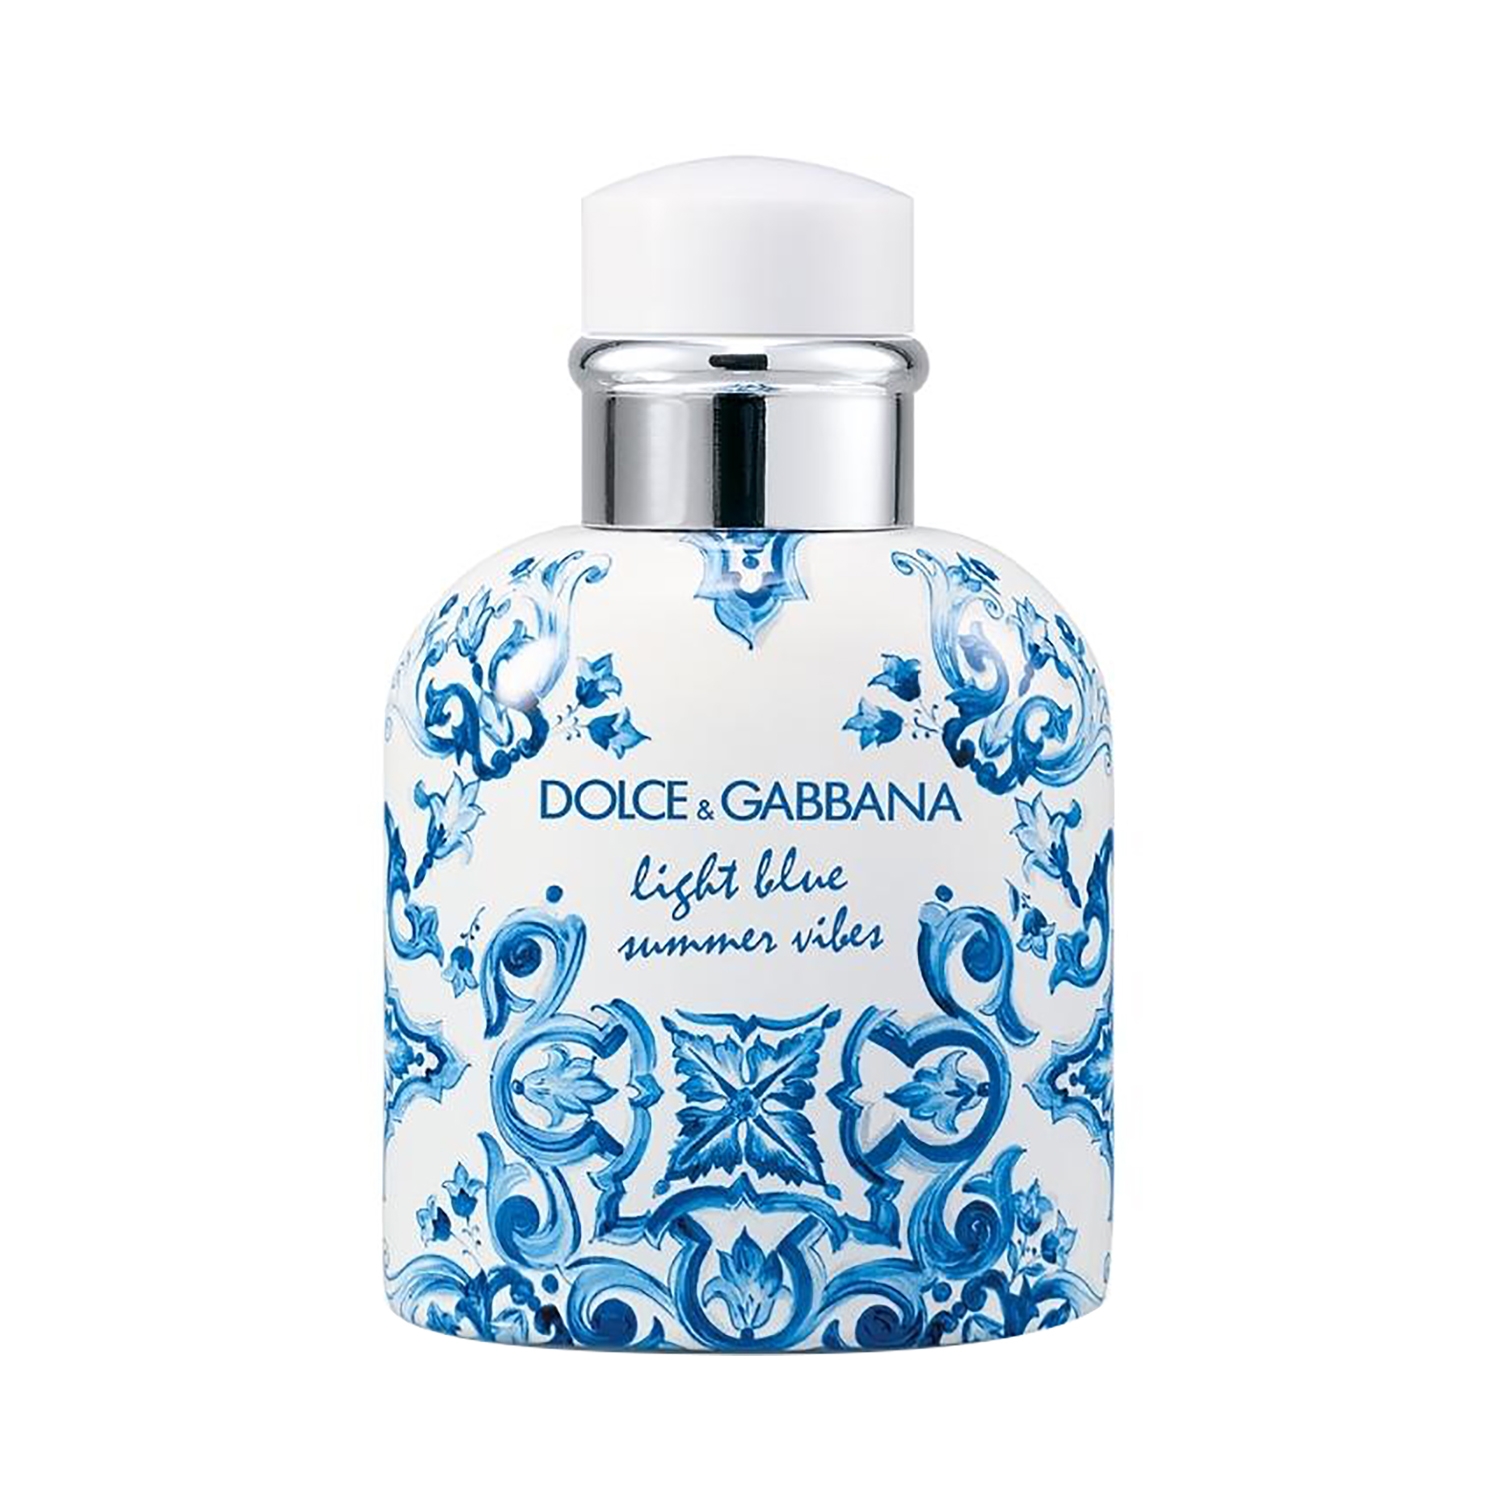 Dolce&Gabbana | Dolce&Gabbana Light Blue Summer Vibes pour Homme EDT (75ml)